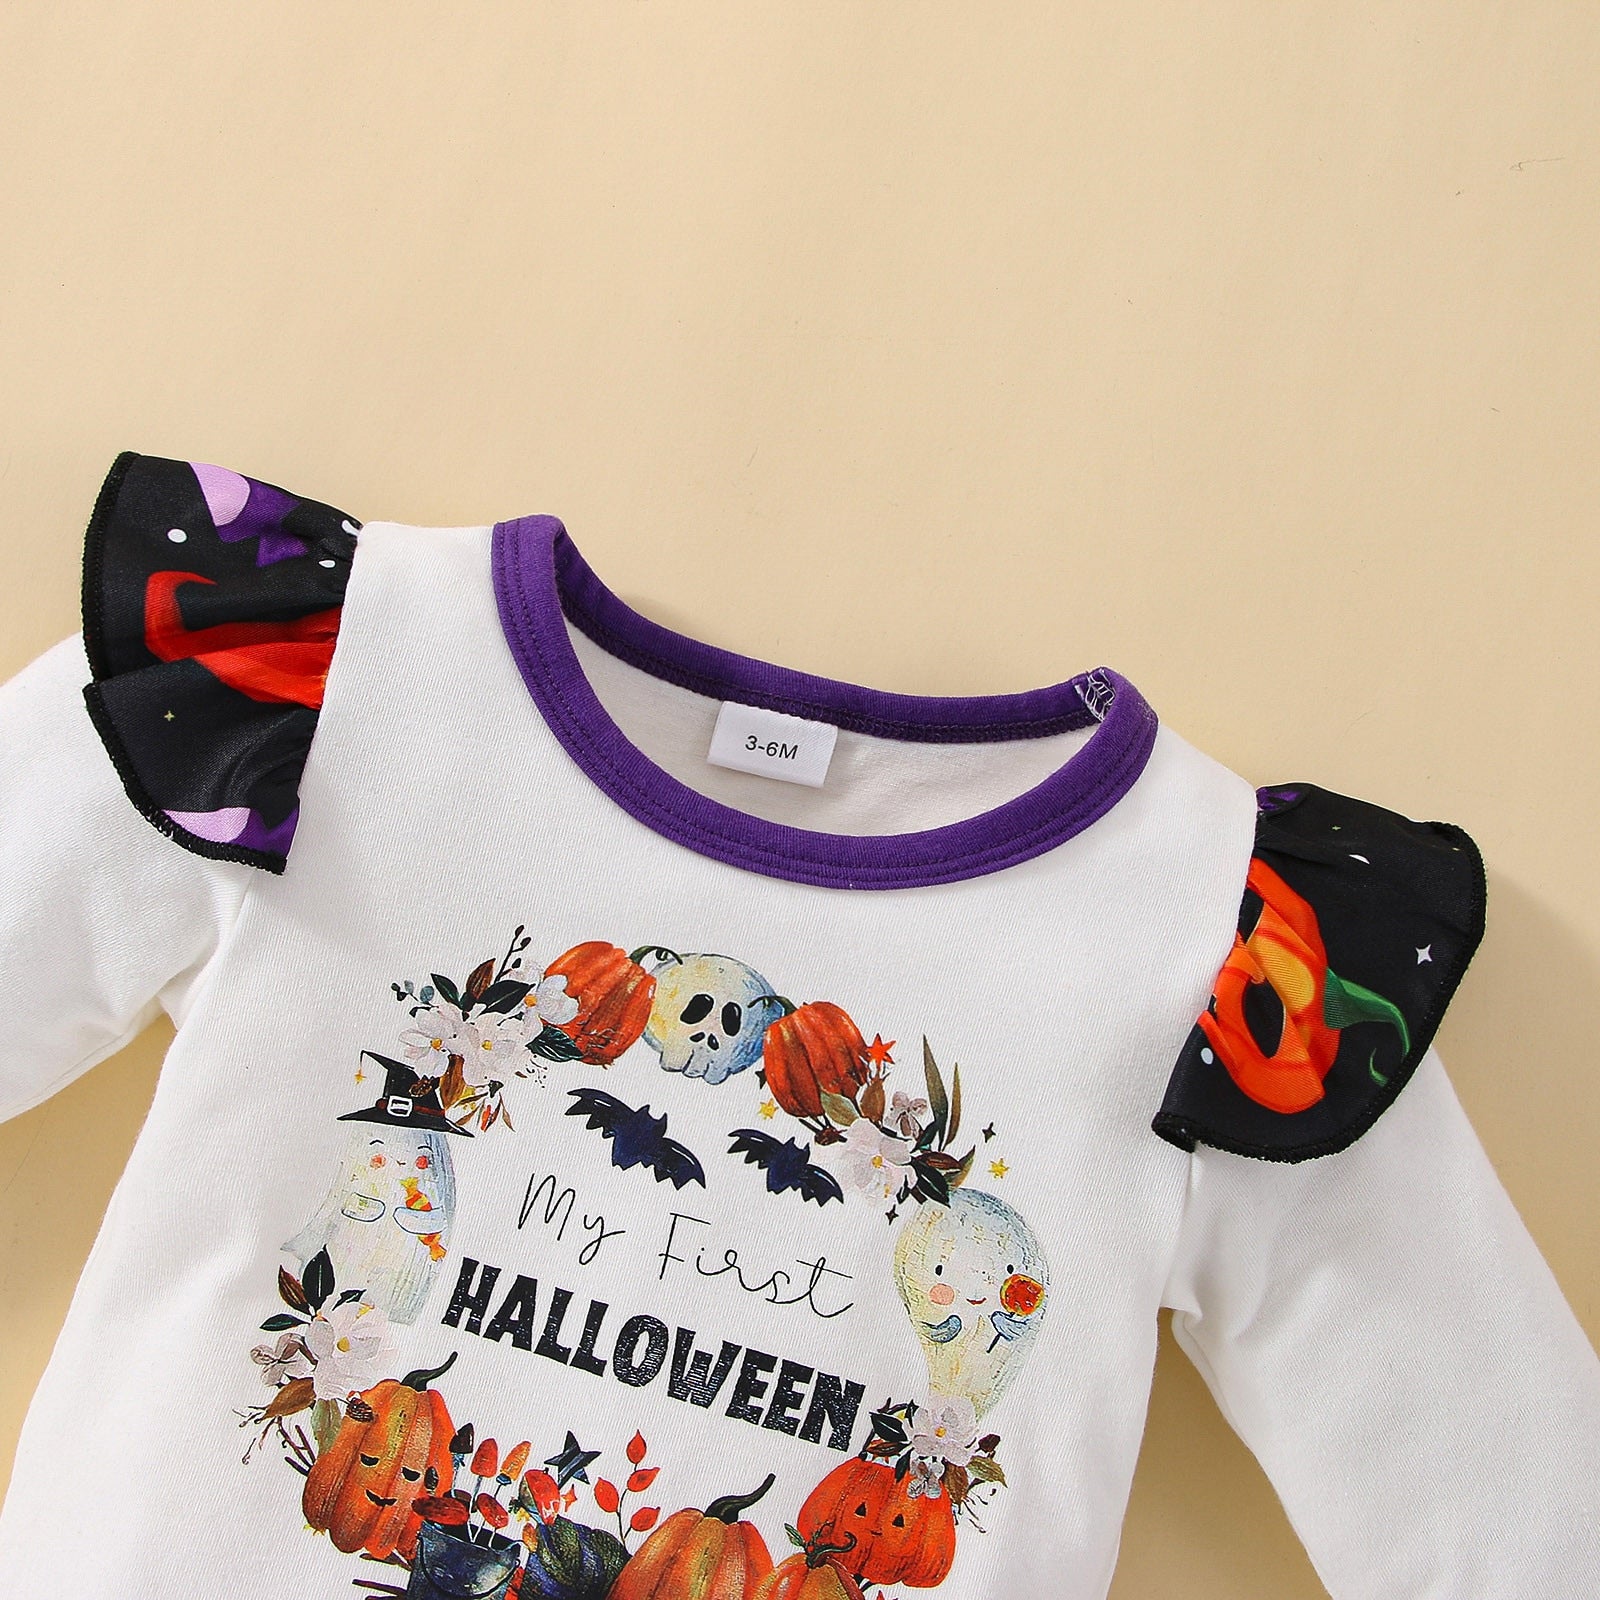 Newborn Infant Girls Halloween Clothes Fall/Winter Long Sleeve Romper, Pants, Headband outfit